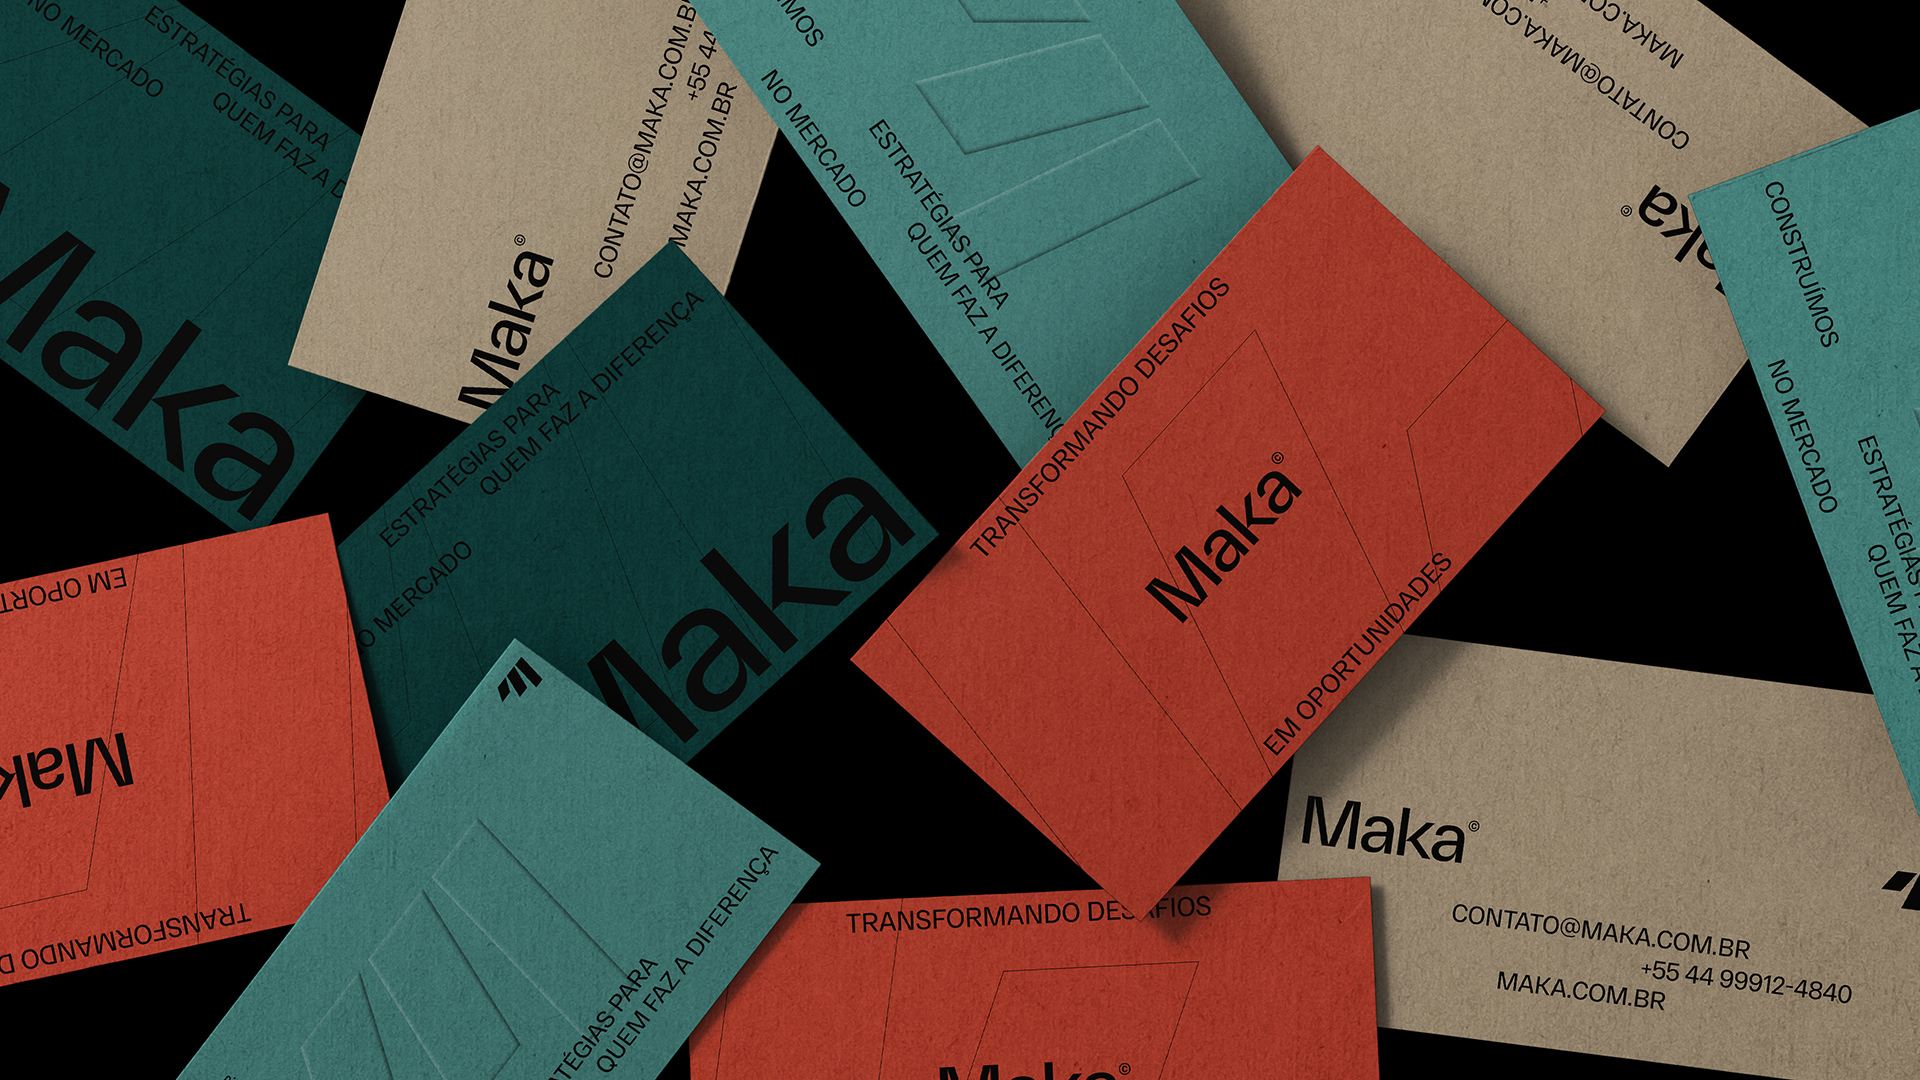 Rutka Studio Transforms Maka Group into a Market Potential Through its New Visual Identity